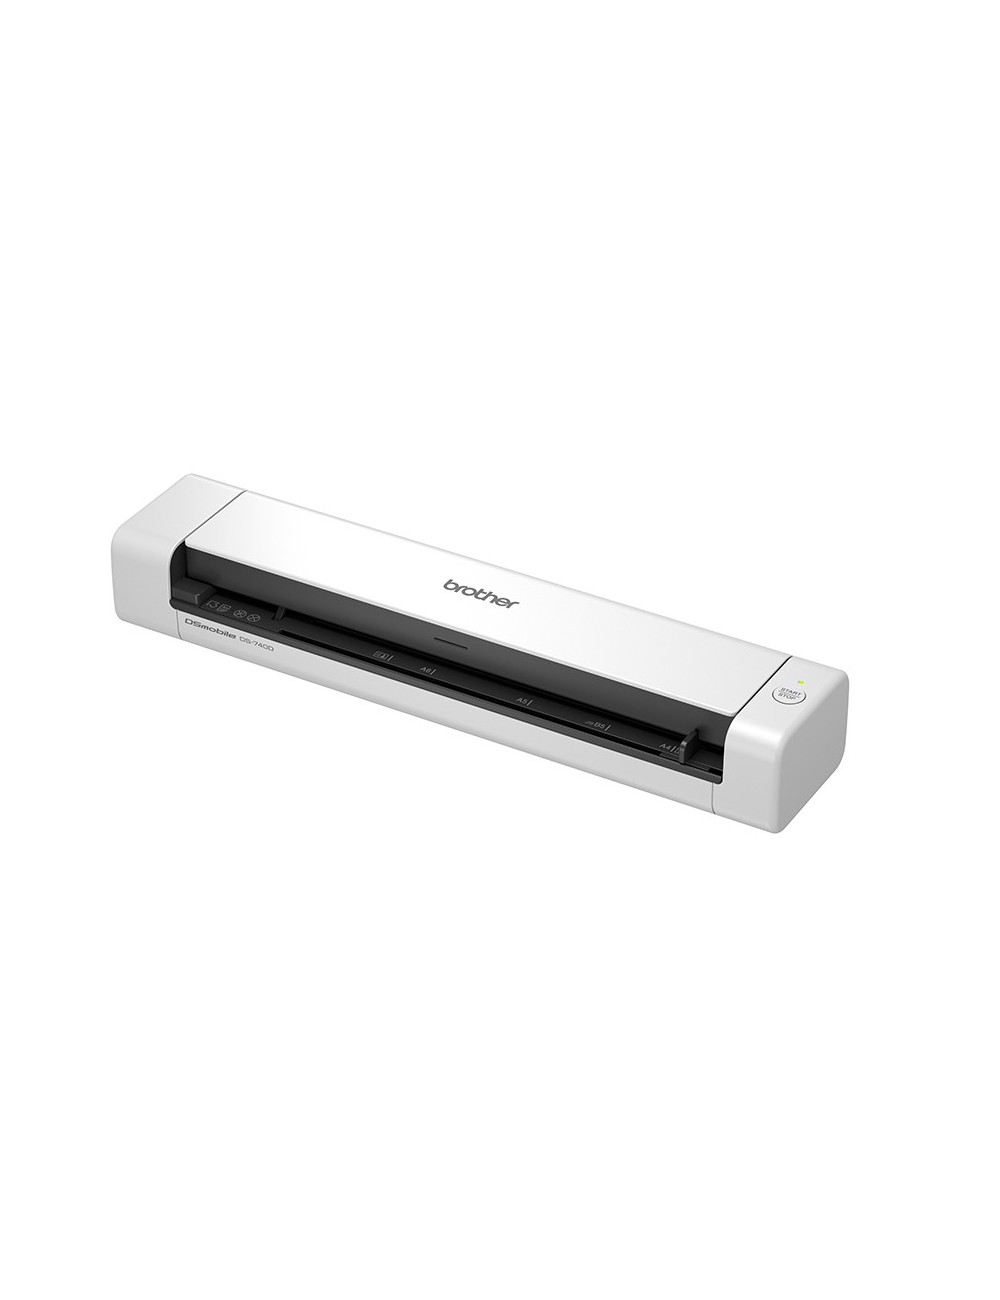 Brother DS-740D scanner Scanner a foglio 600 x 600 DPI A4 Nero, Bianco